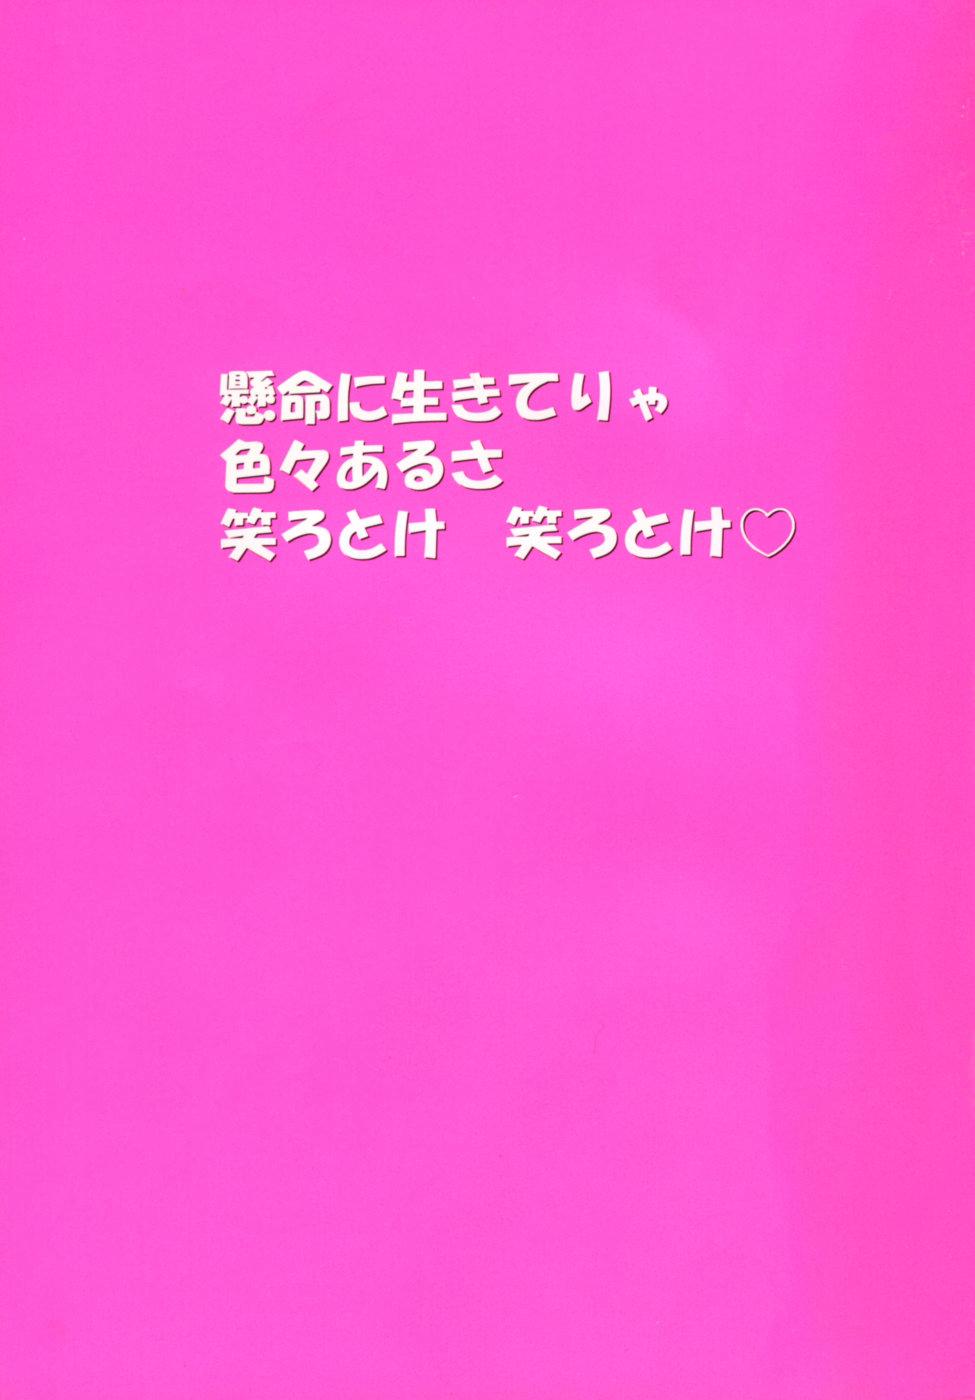 Shining Musume. 5. Five Sense of Love 7